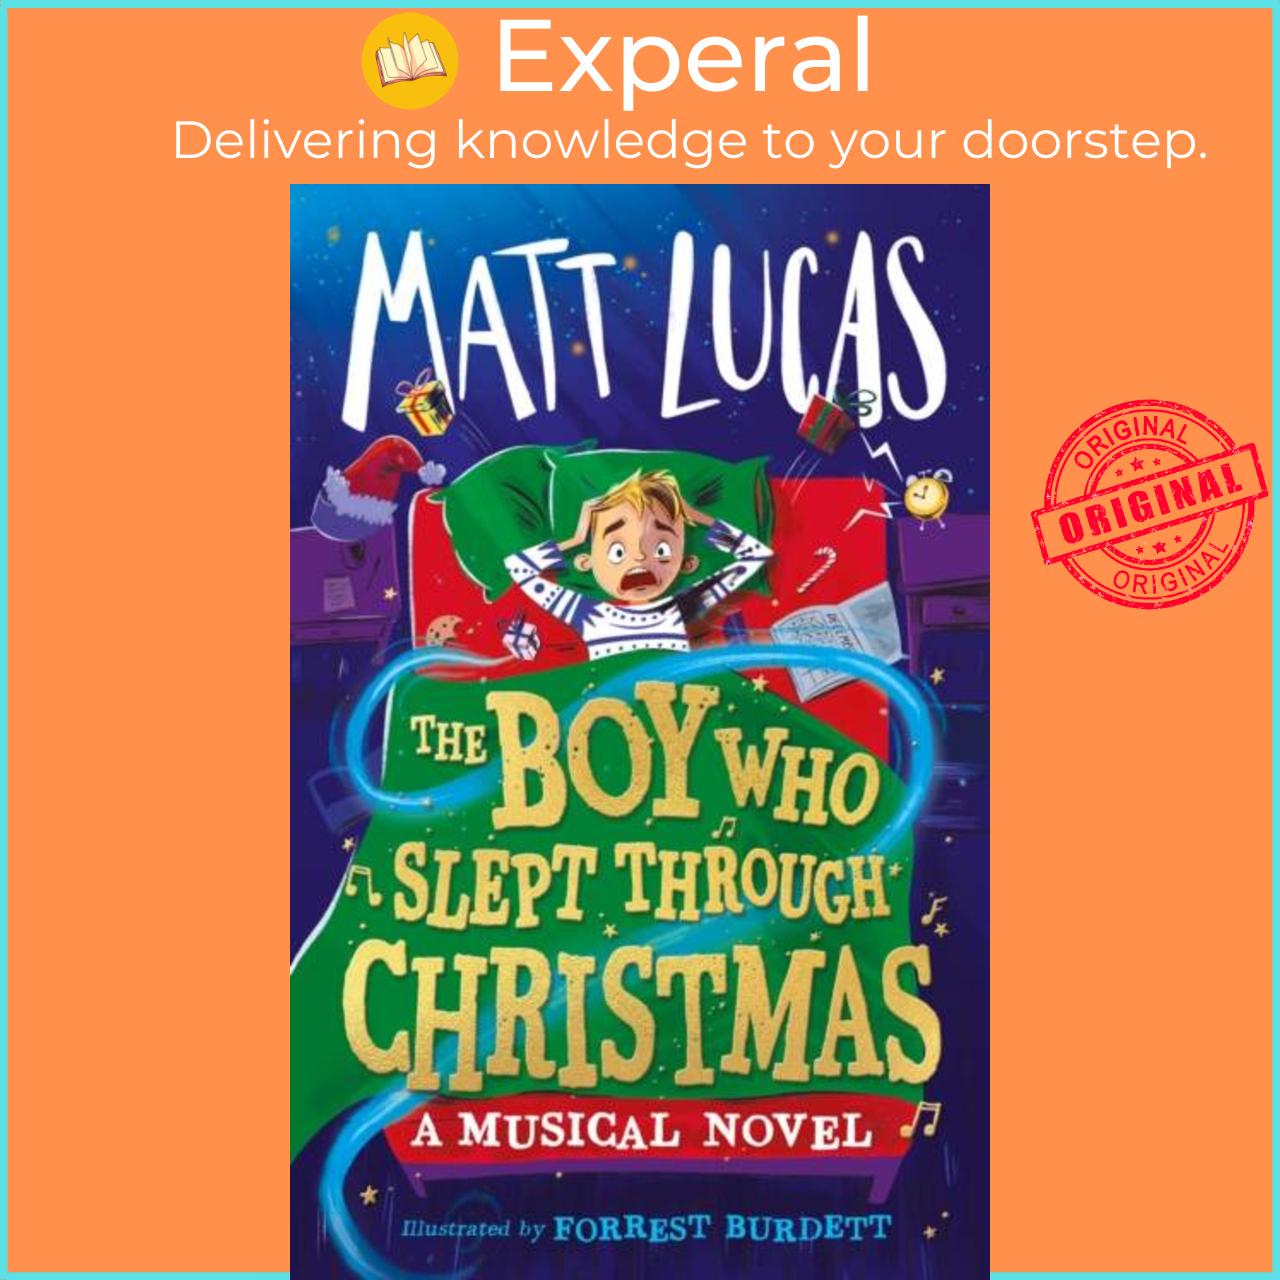 Sách - The Boy Who Slept Through Christmas by Matt Lucas (UK edition, hardcover)